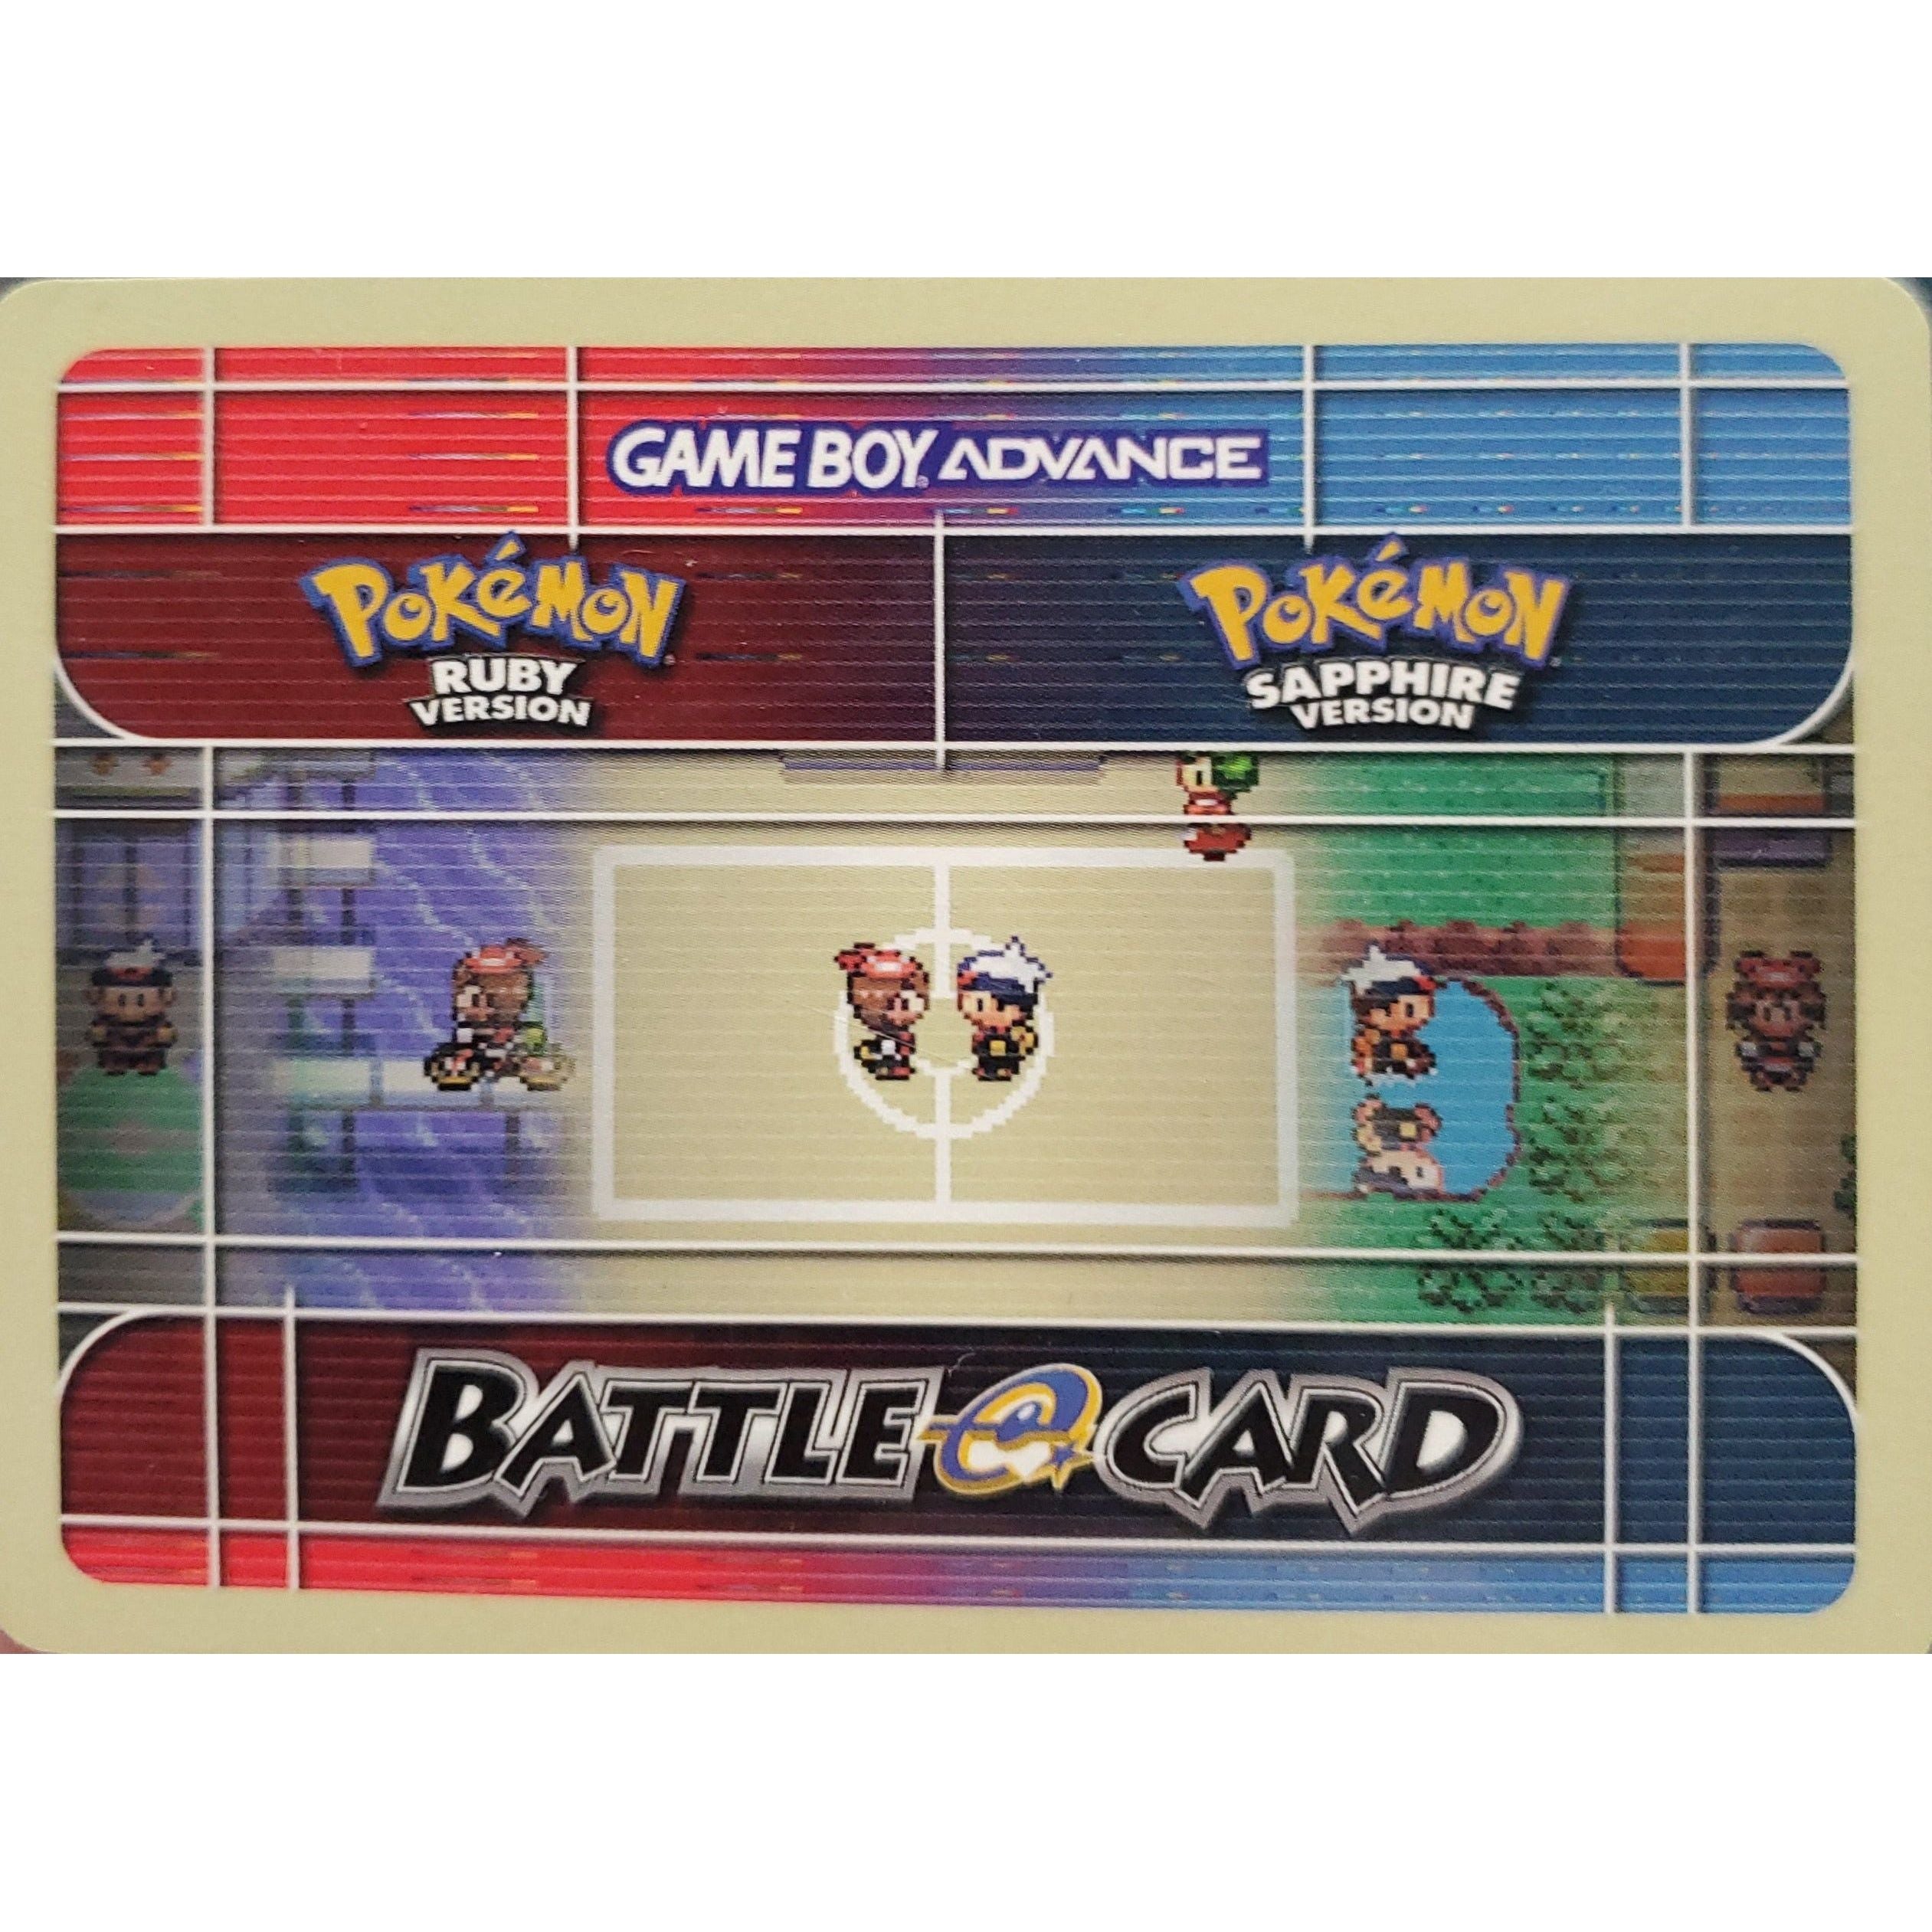 GBA - Pokemon Battle Card - Pokemaniac Tyler